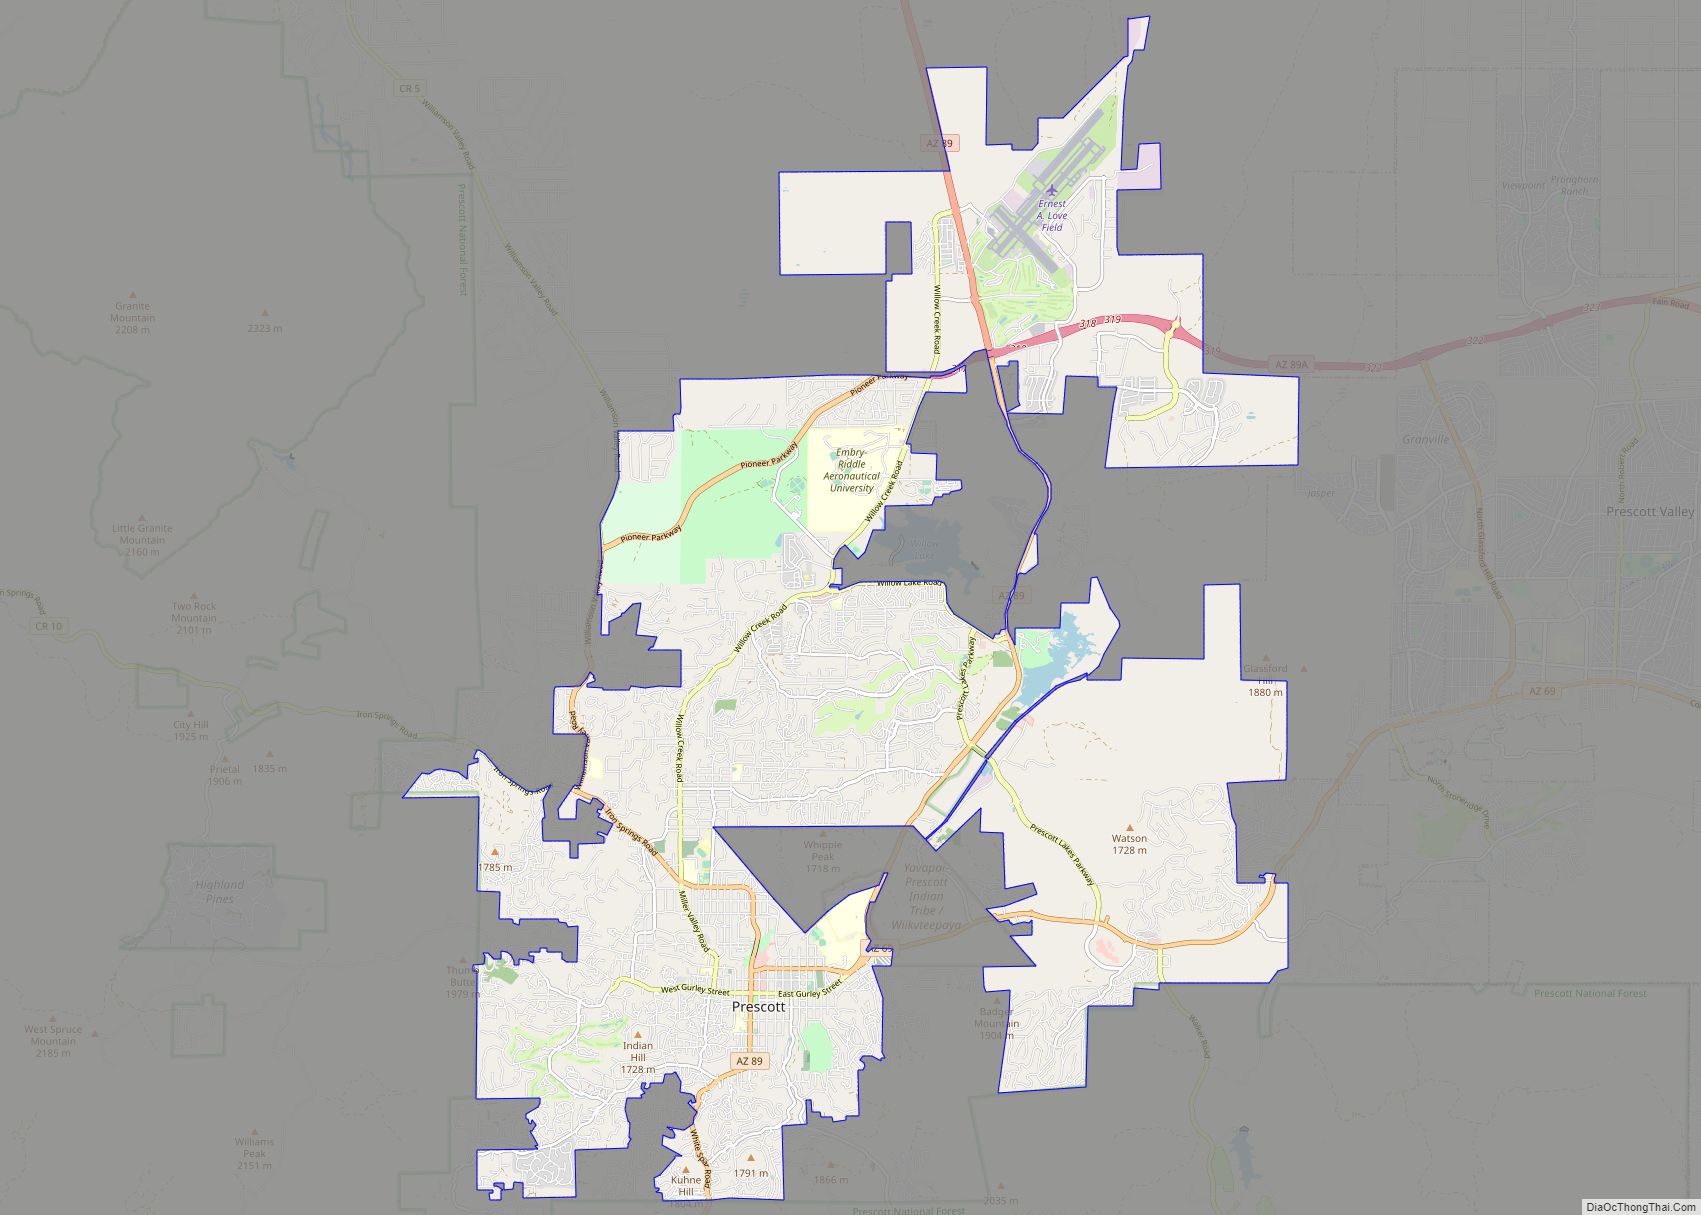 Map of Prescott city, Arizona